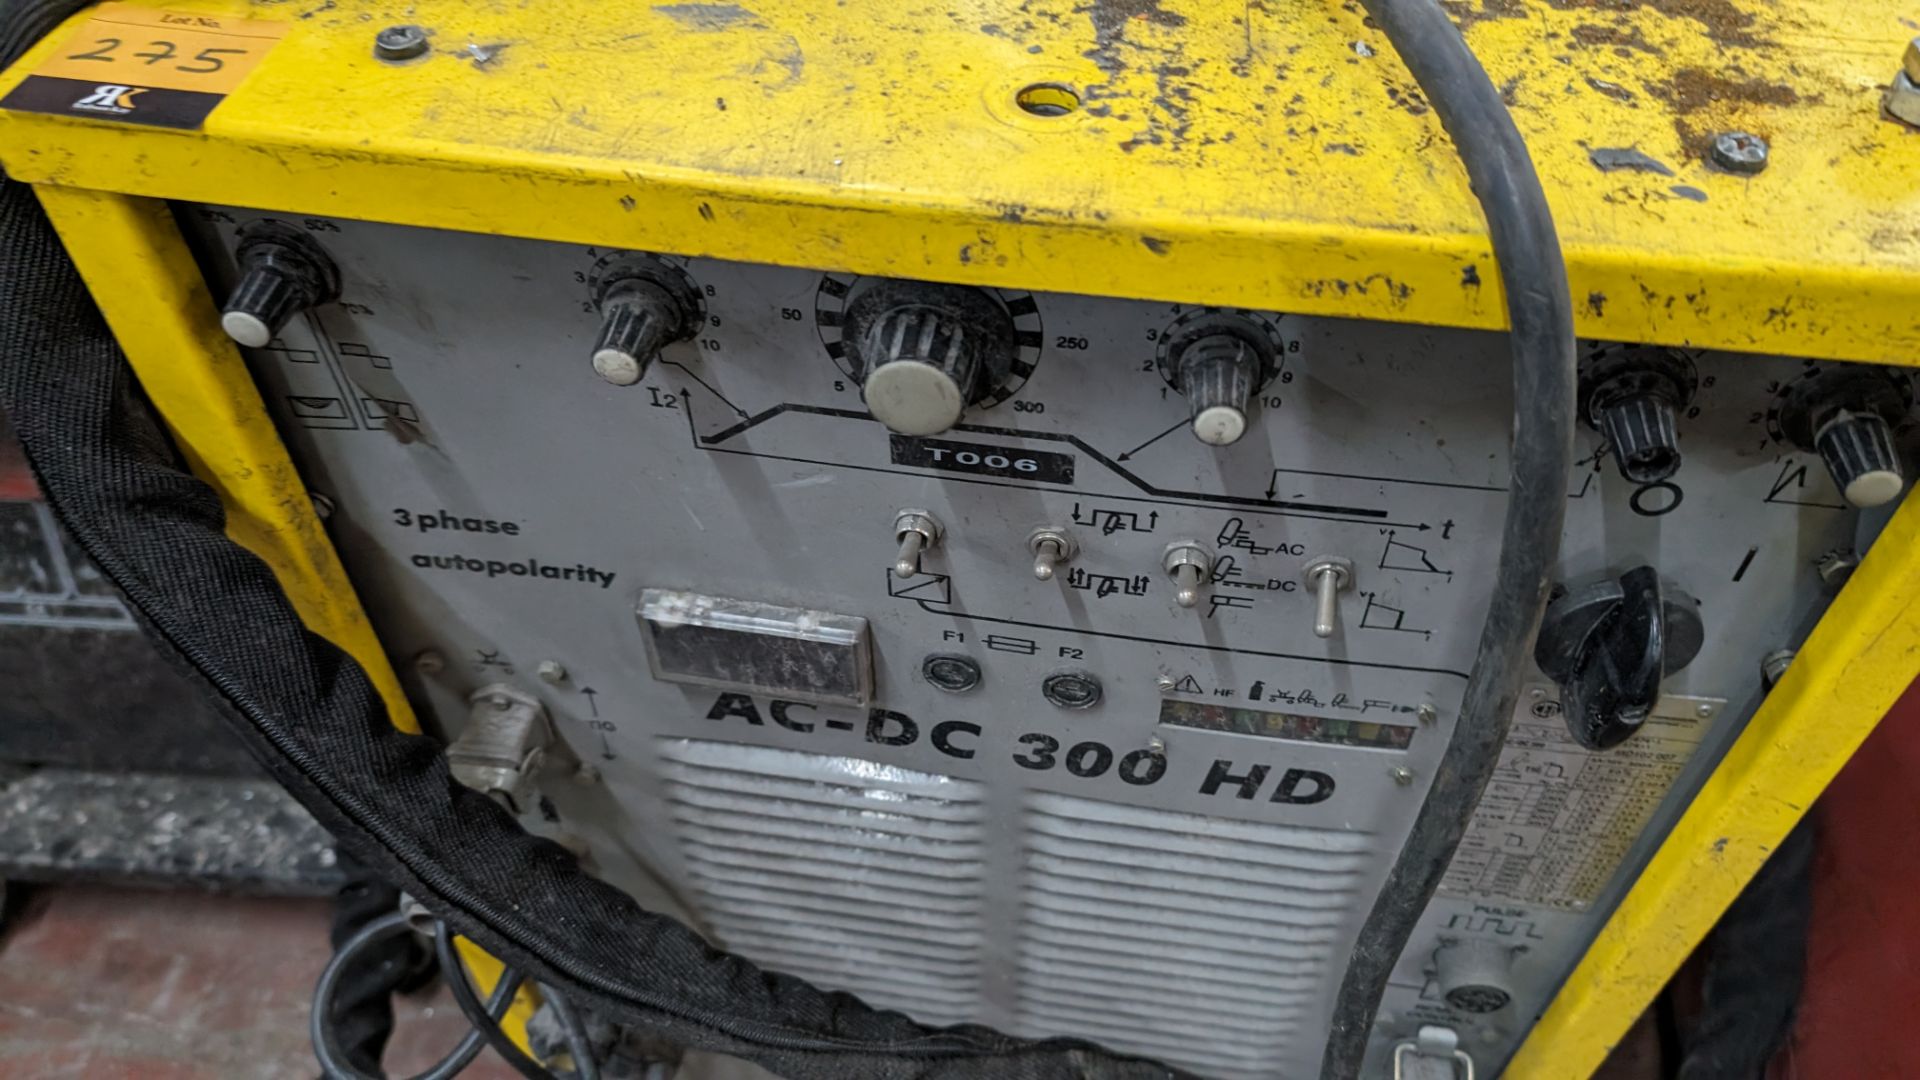 CEA AC/DC 300 HD welding unit - Image 5 of 10